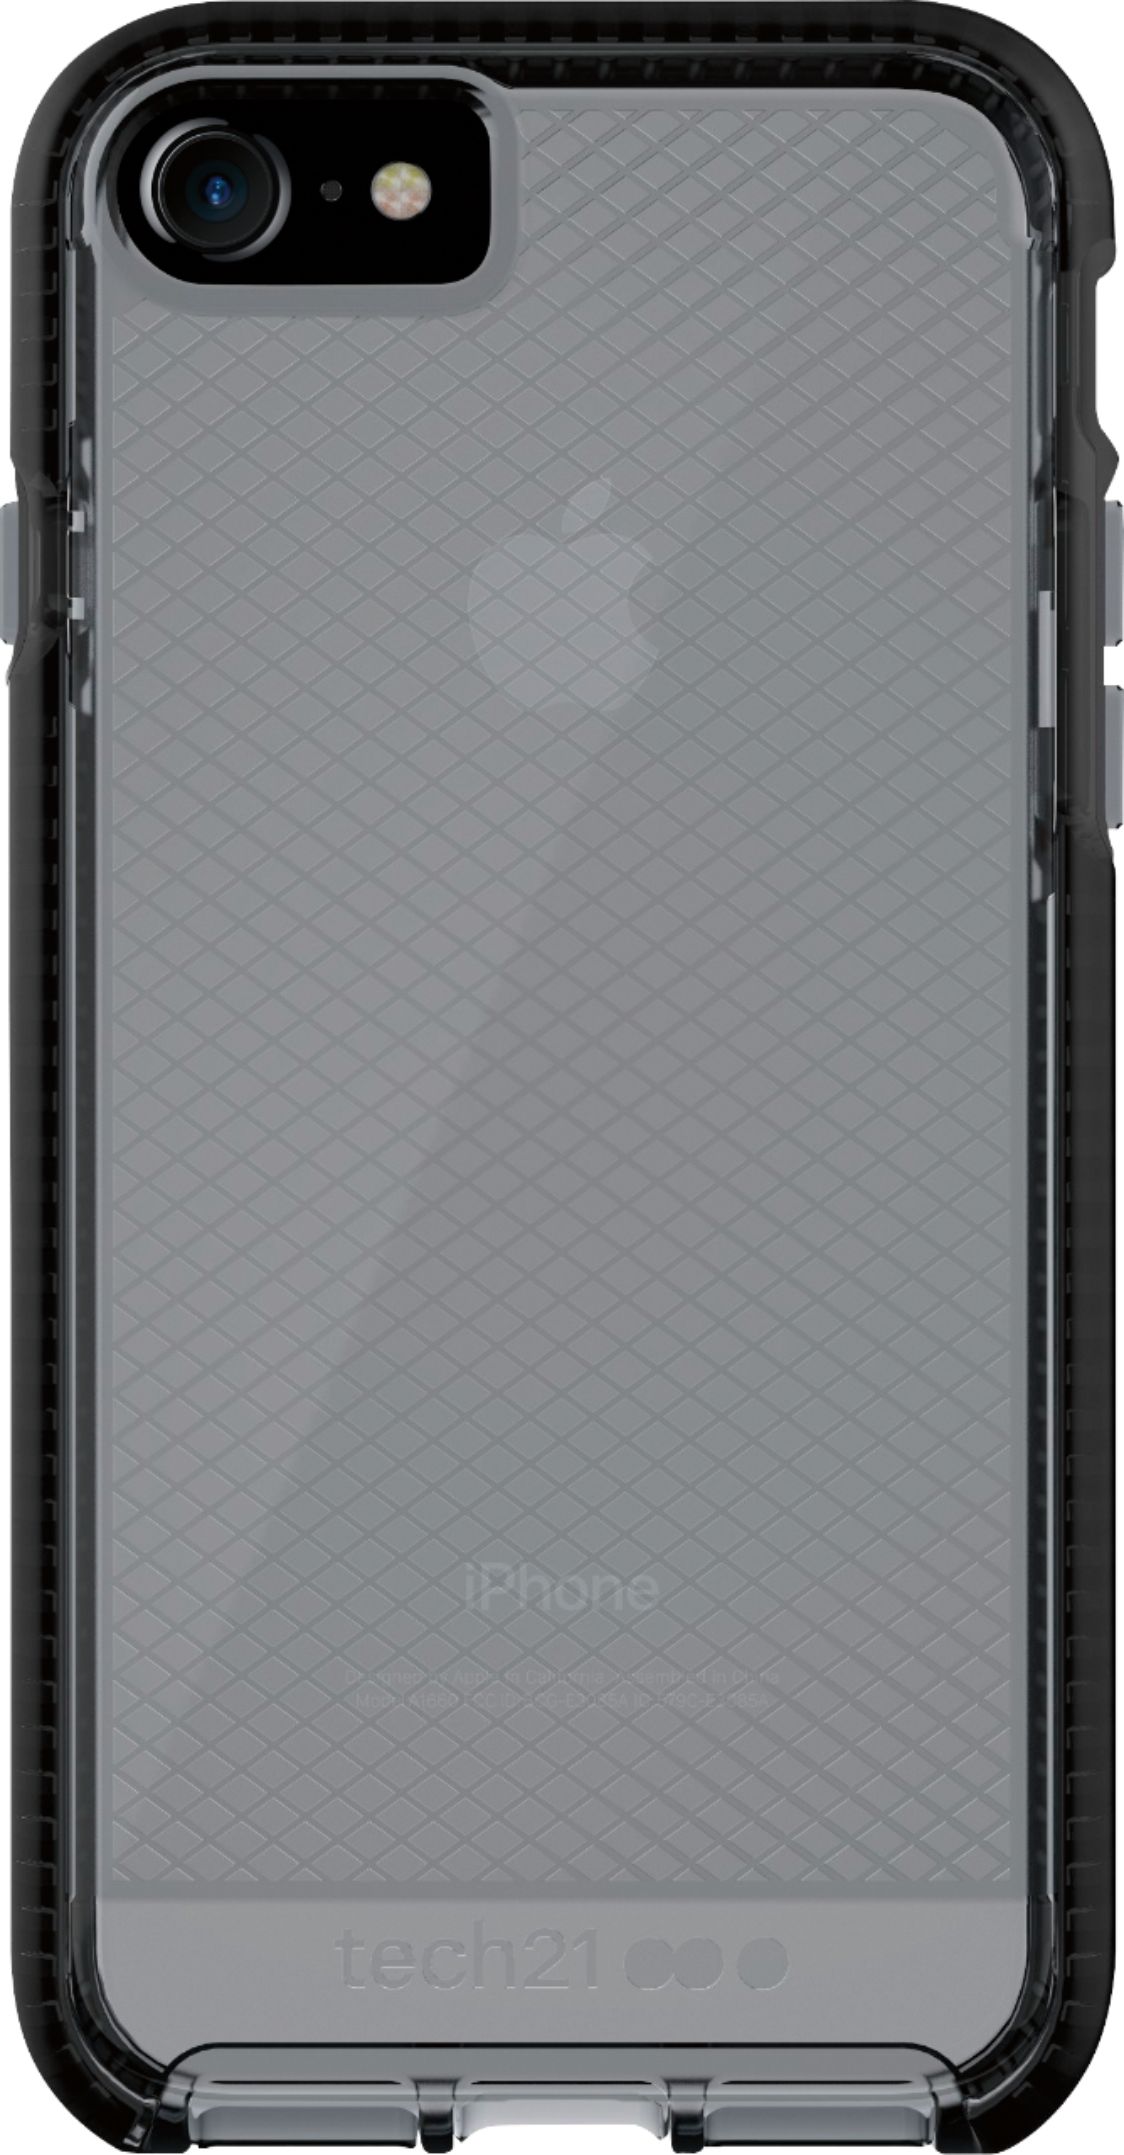 lijden ONWAAR Bounty Tech21 Evo Check Case for Apple iPhone 7, 8 and SE (3rd Generation)  Smokey/Black 47718BBR - Best Buy